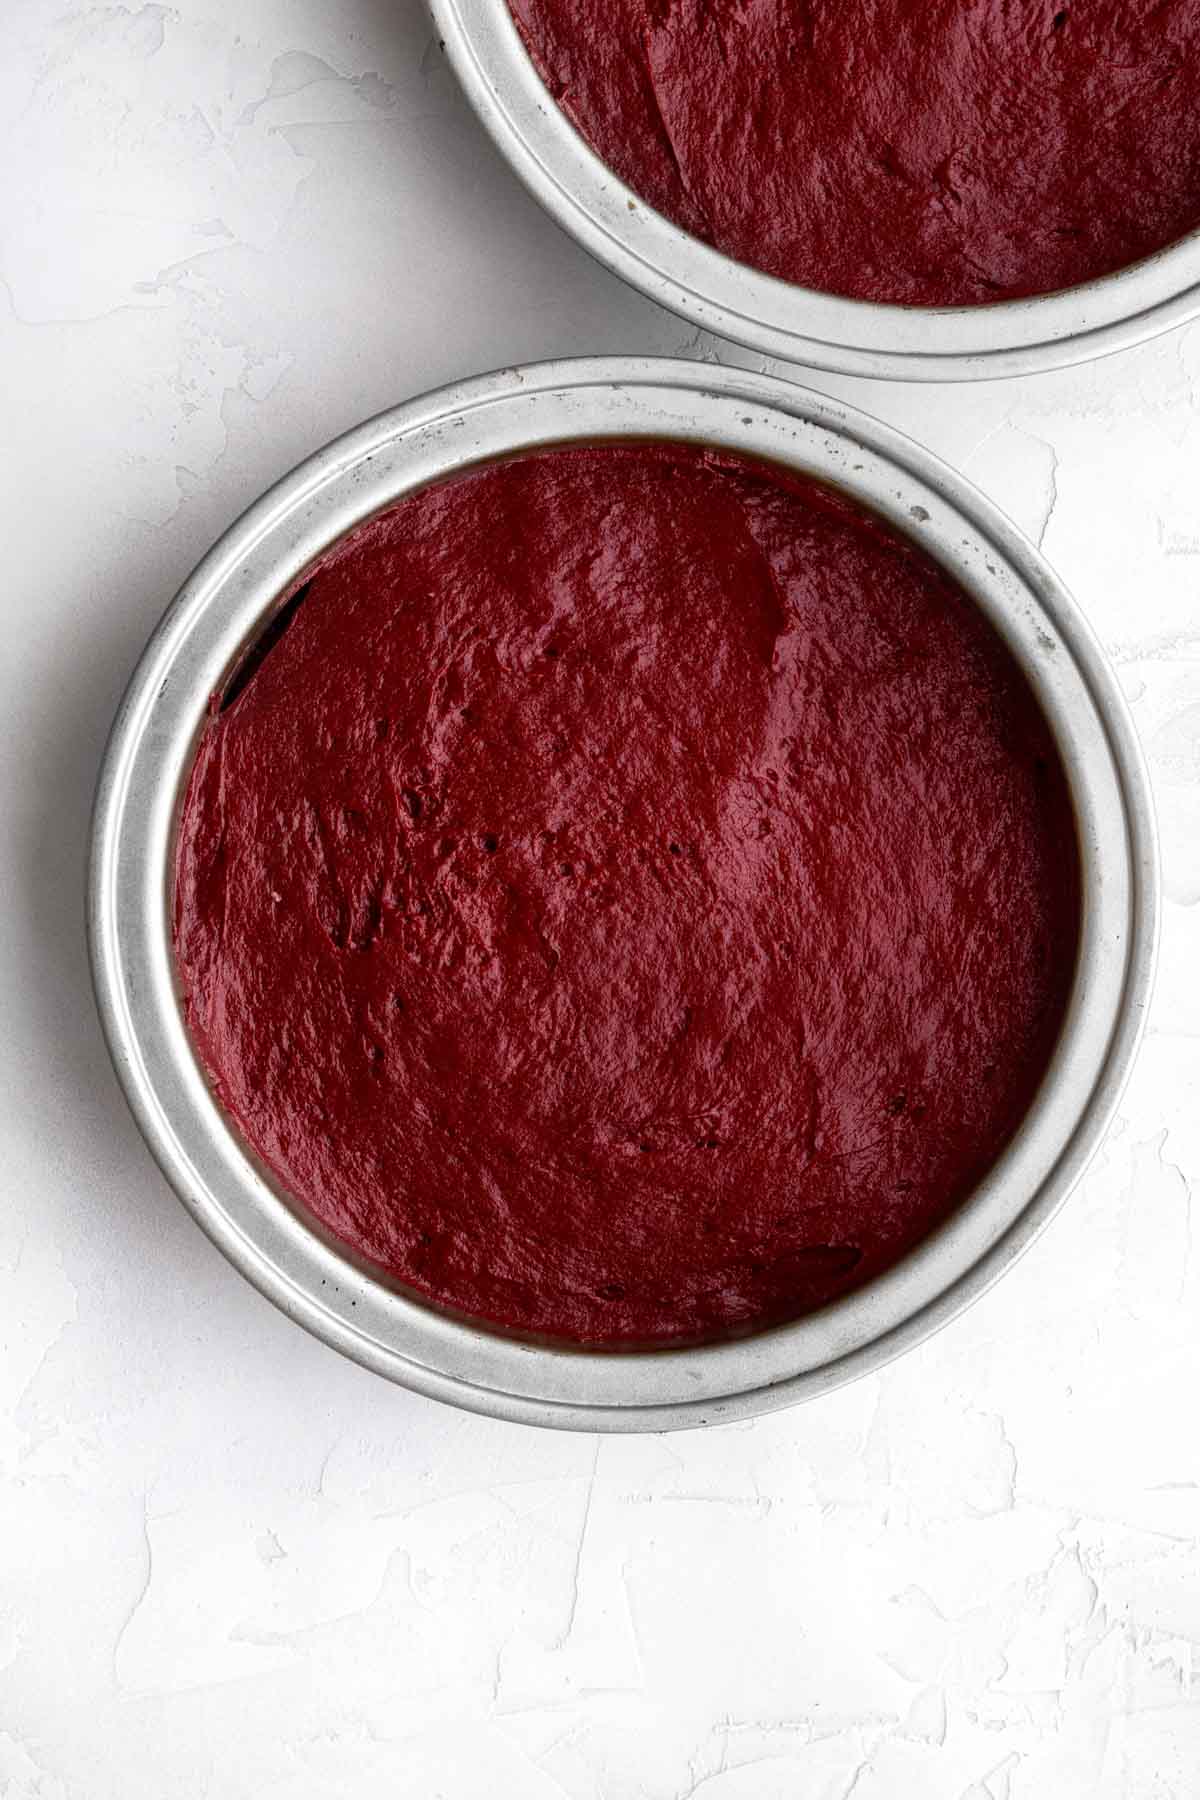 The red batter in circular cake pans.